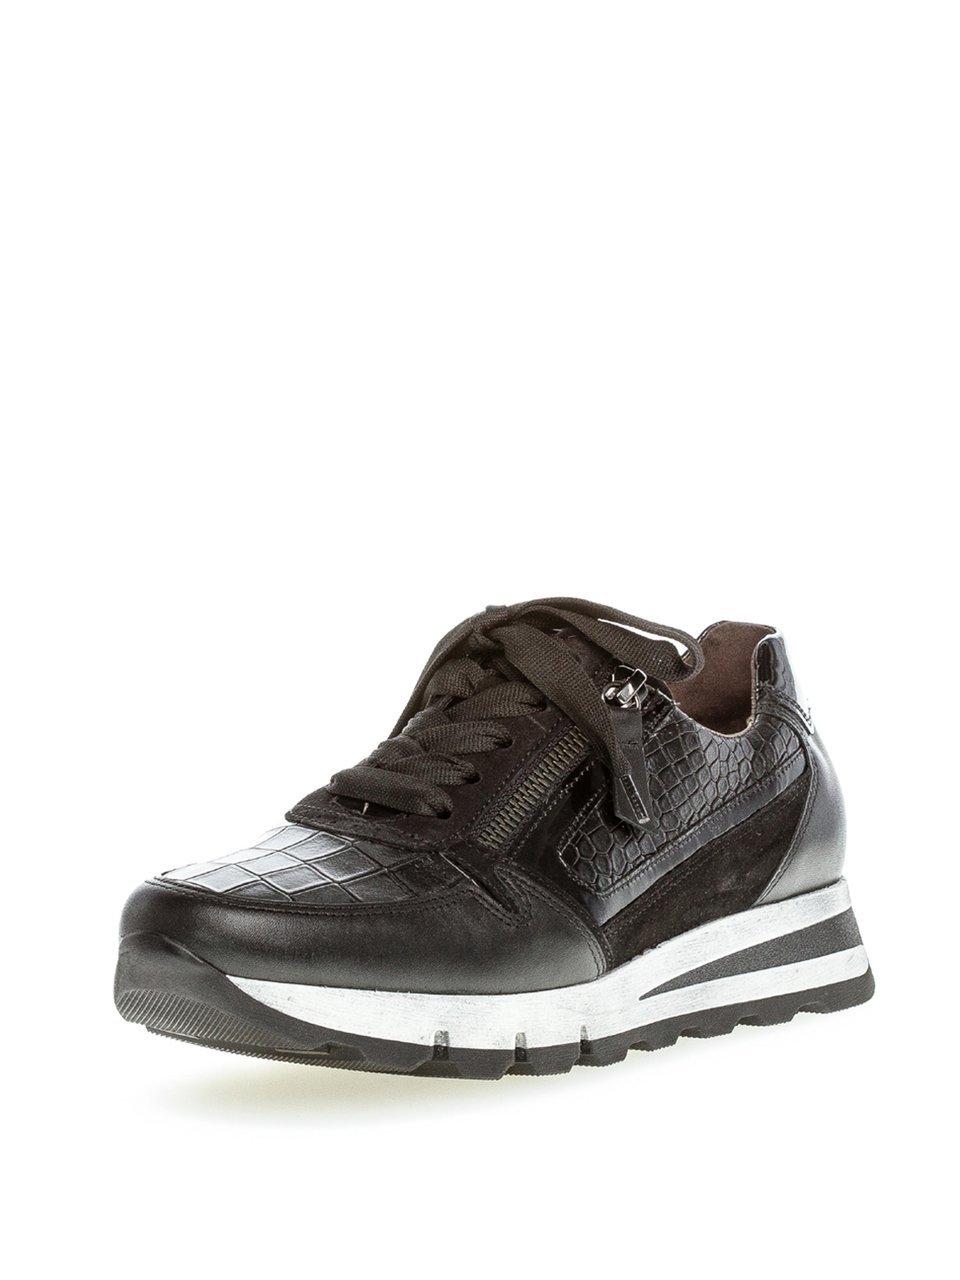 Gabor Comfort - Les sneakers 100% cuir